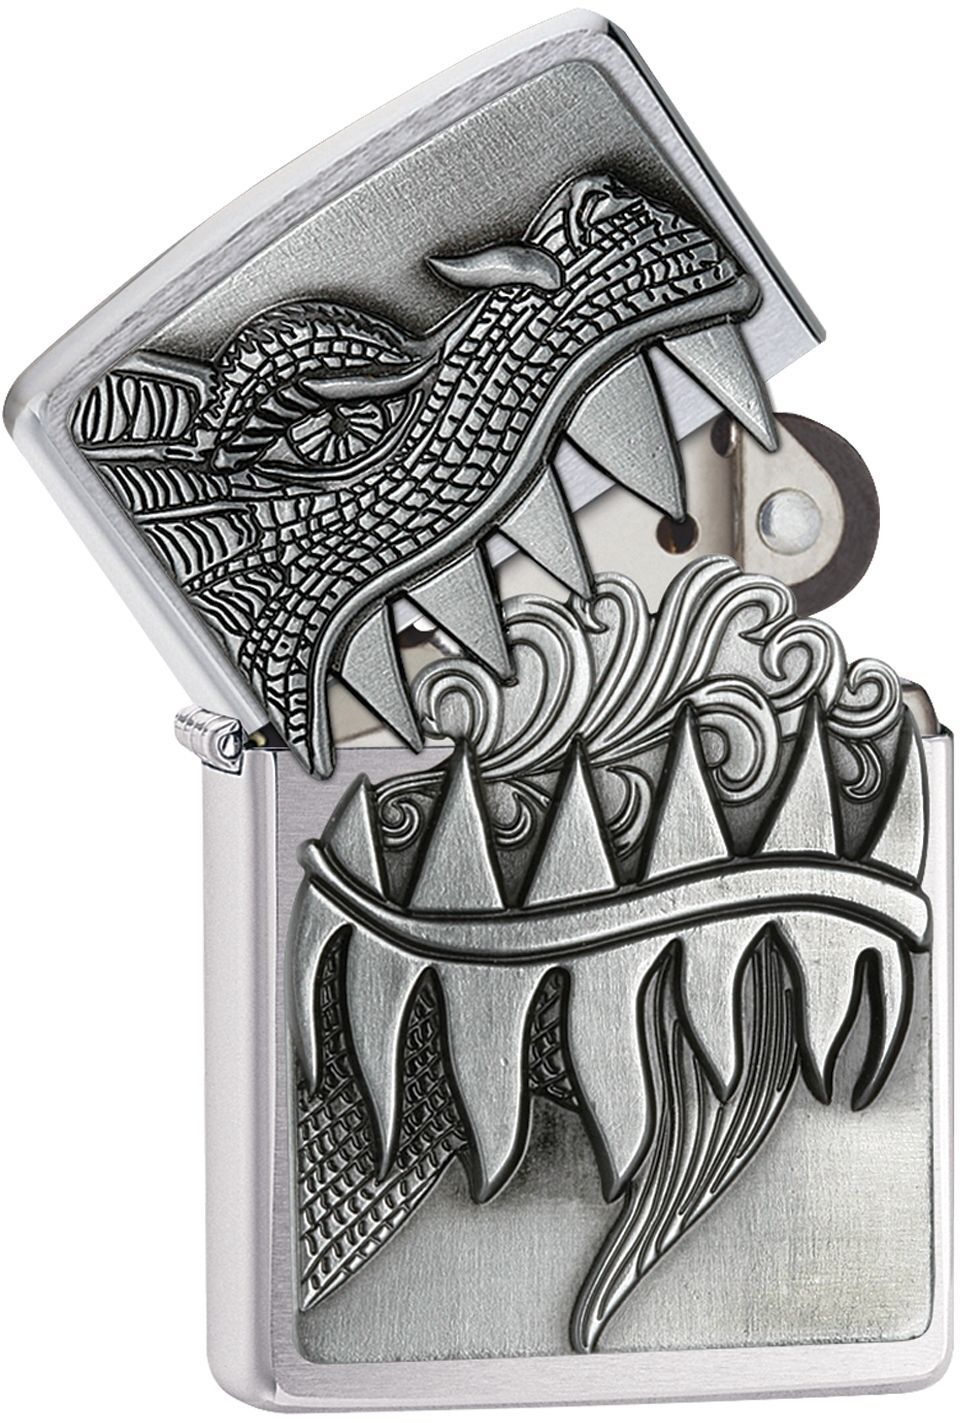 Zippo Windproof Fire Breathing Dragon Lighter, 28969, New In Velour Box